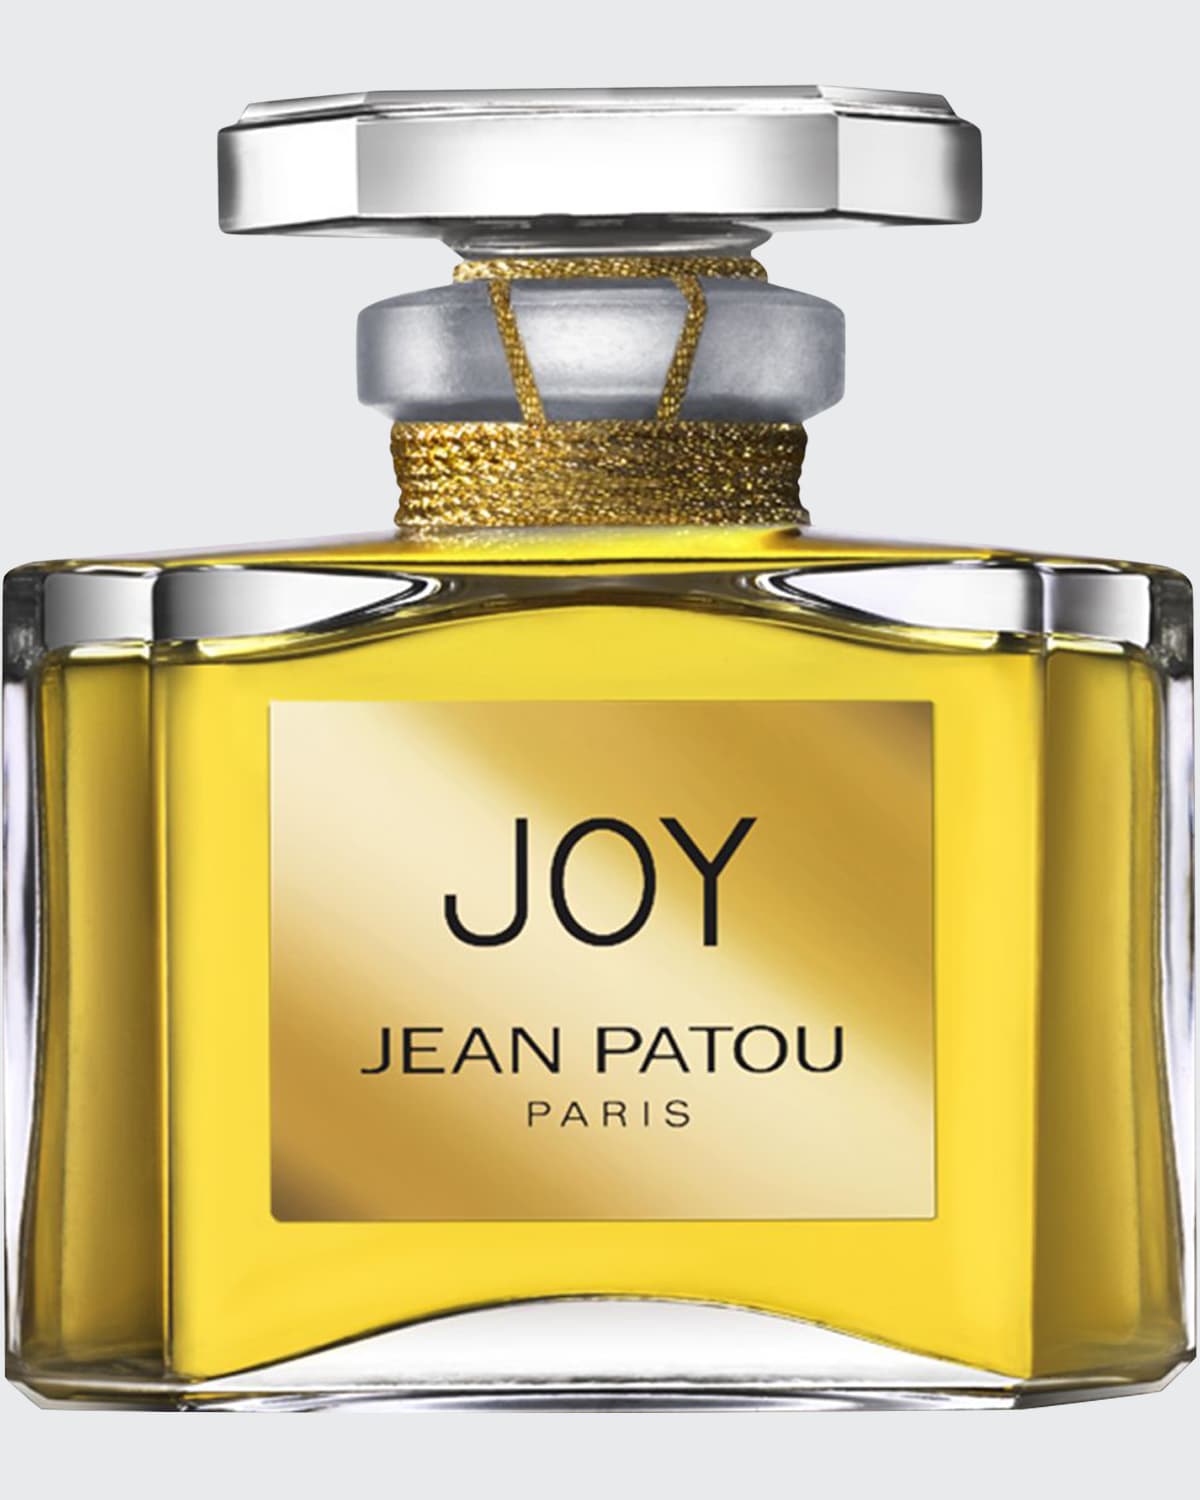 Jean Patou Joy Pure Parfum, 30 mL